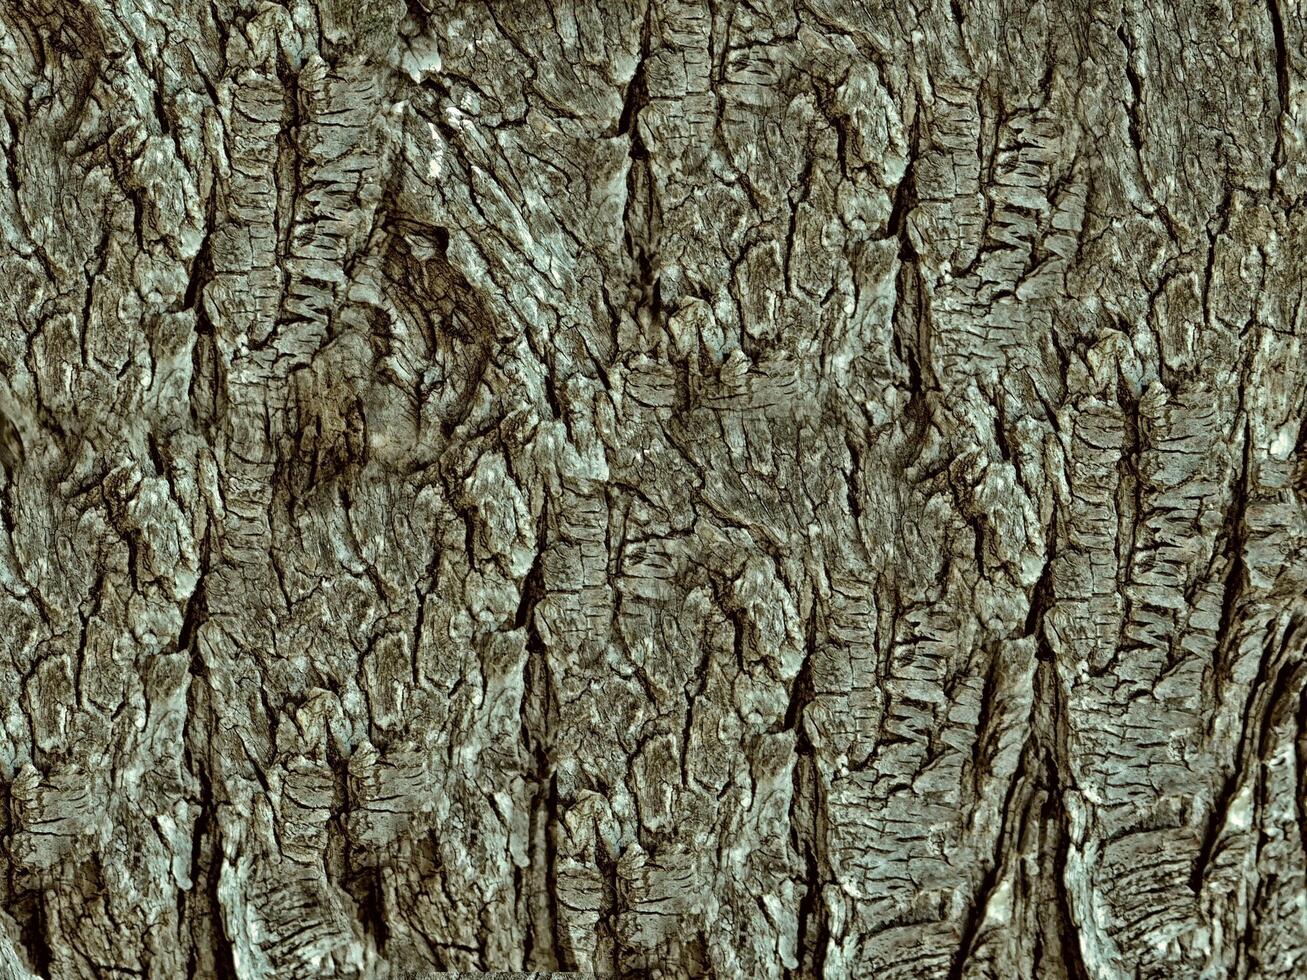 Brown Wood Texture photo